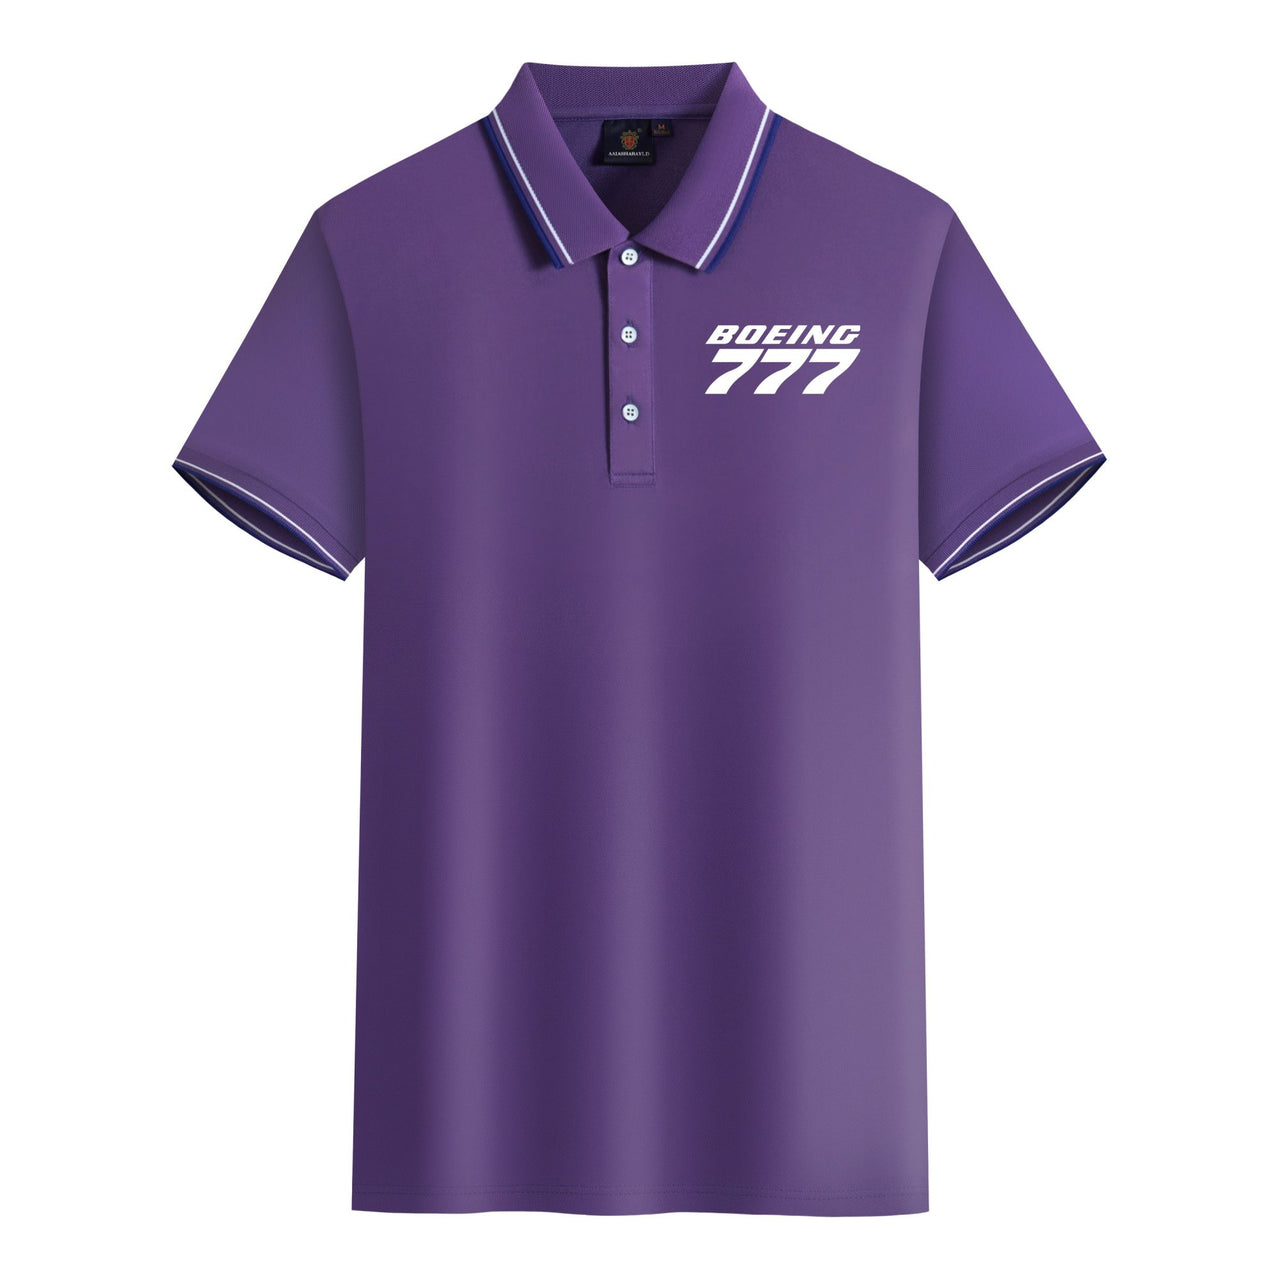 Boeing 777 & Text Designed Stylish Polo T-Shirts